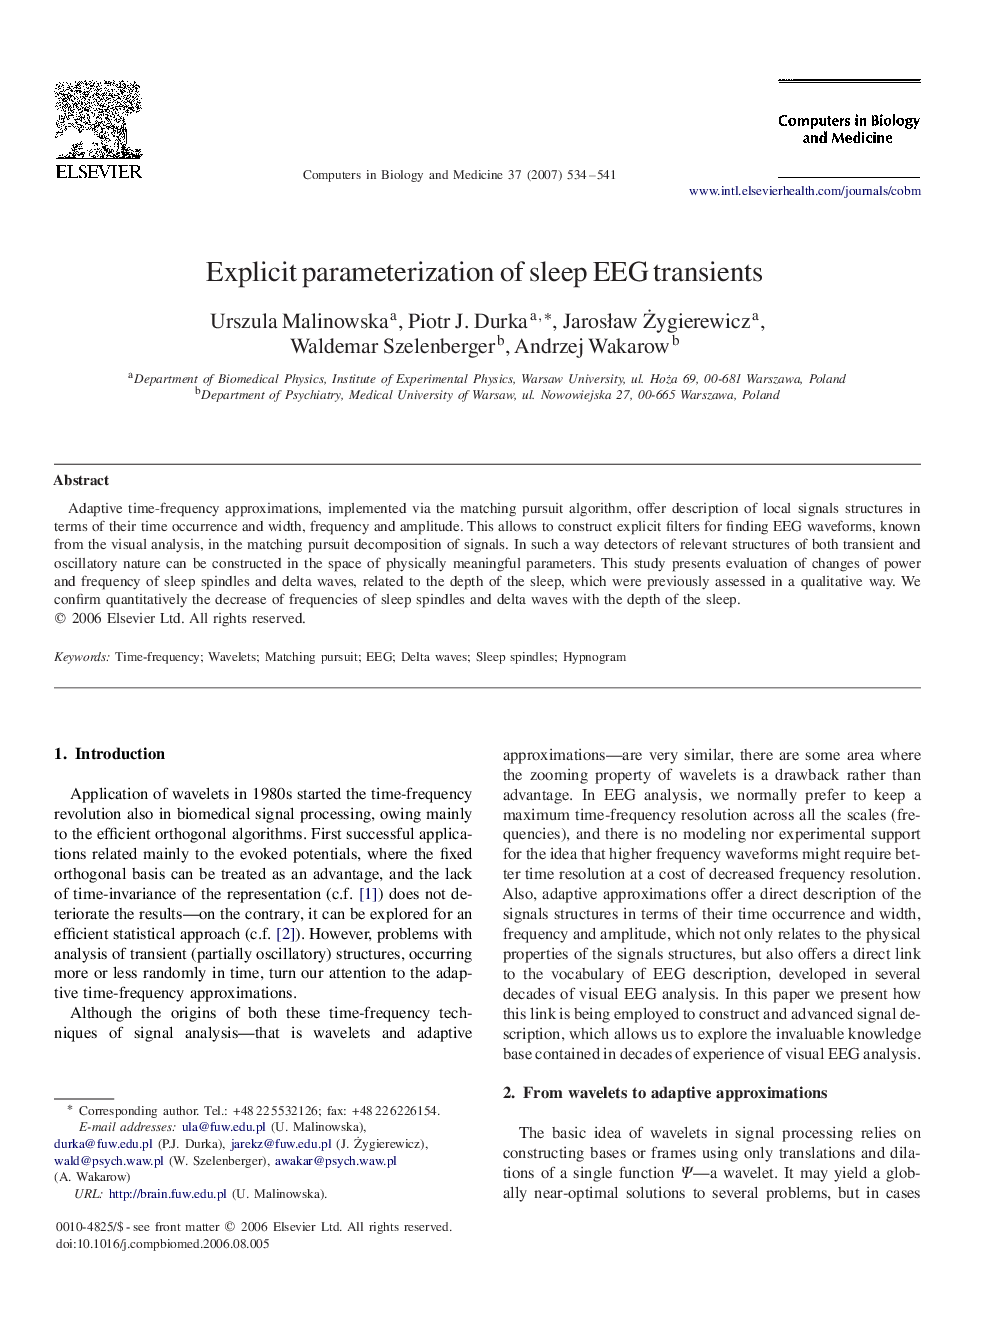 Explicit parameterization of sleep EEG transients